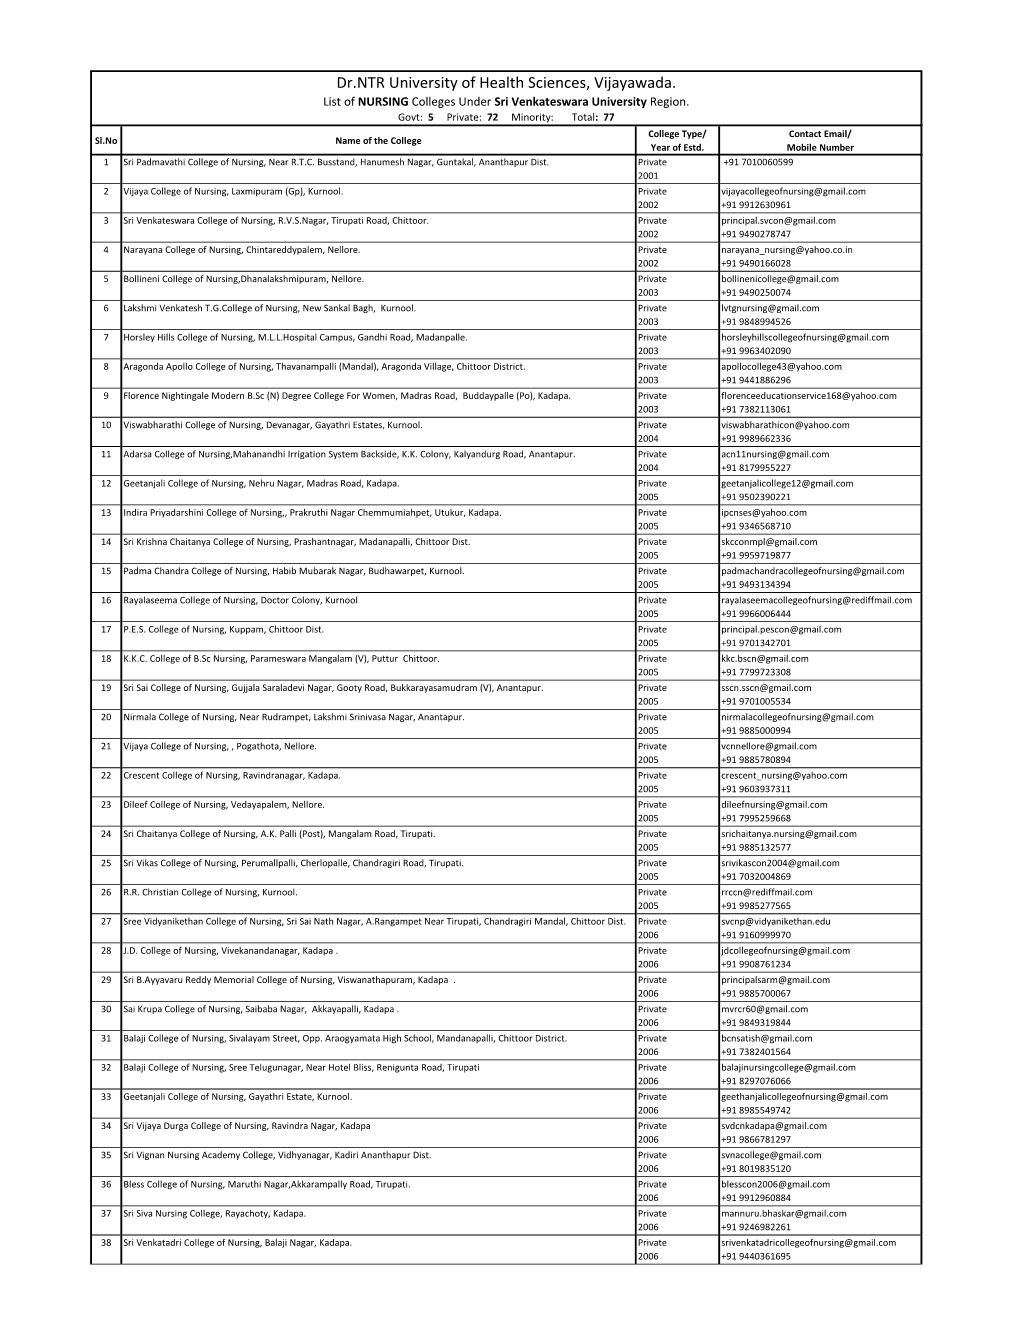 Dr.NTR University of Health Sciences, Vijayawada. List of NURSING Colleges Under Sri Venkateswara University Region